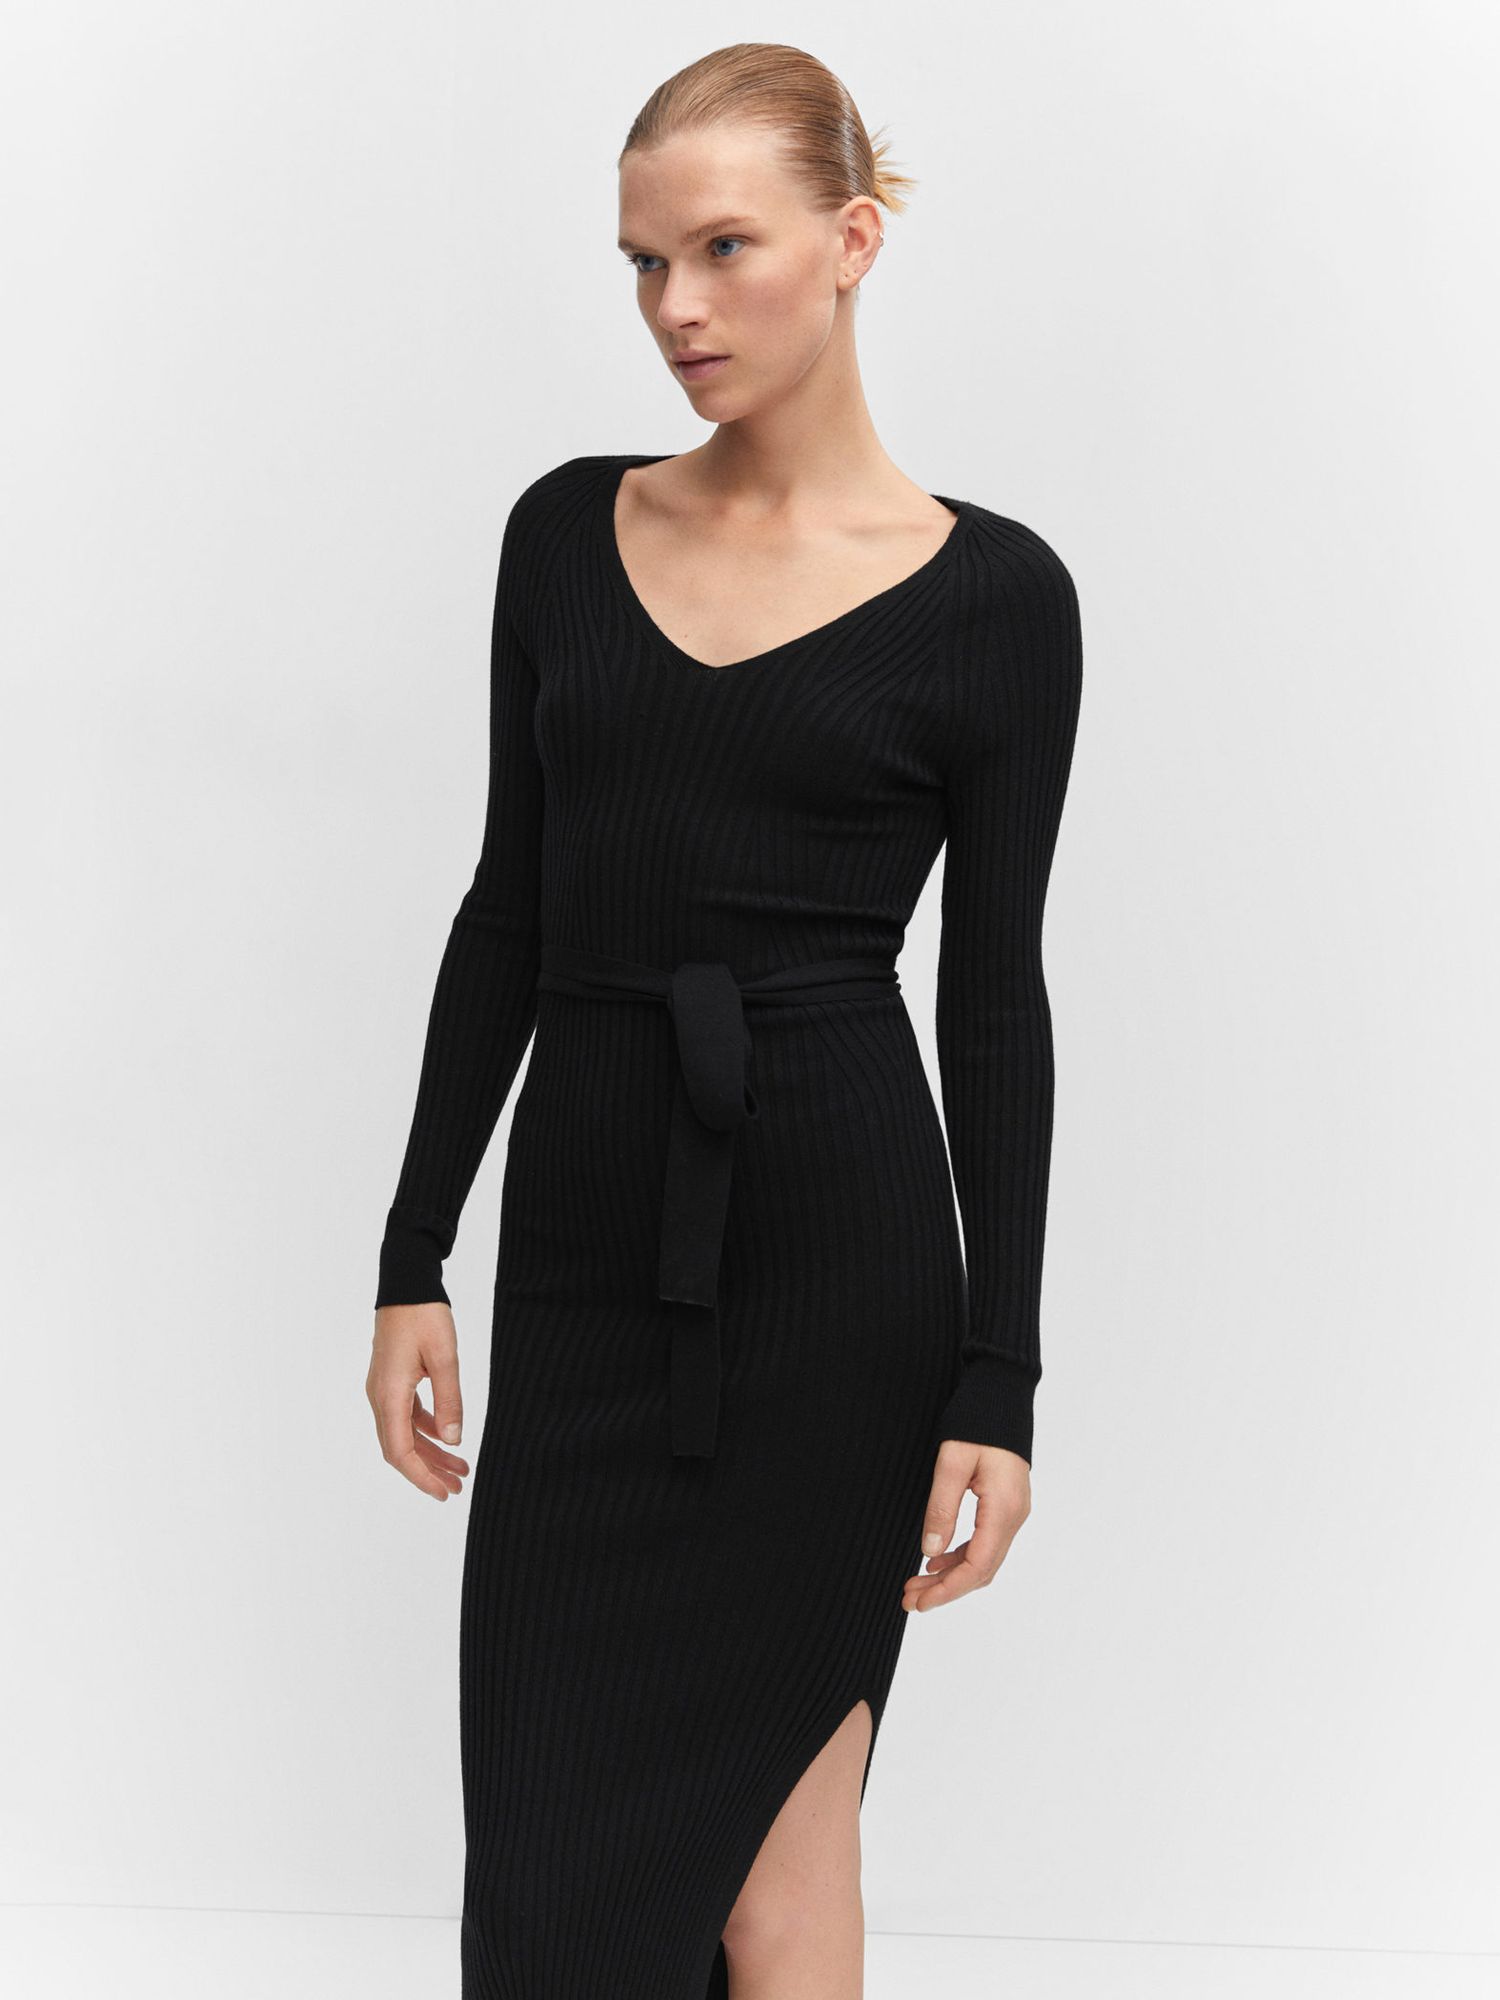 Mango Goletabs Knitted Belted Bodycon Midi Dress, Black, 4